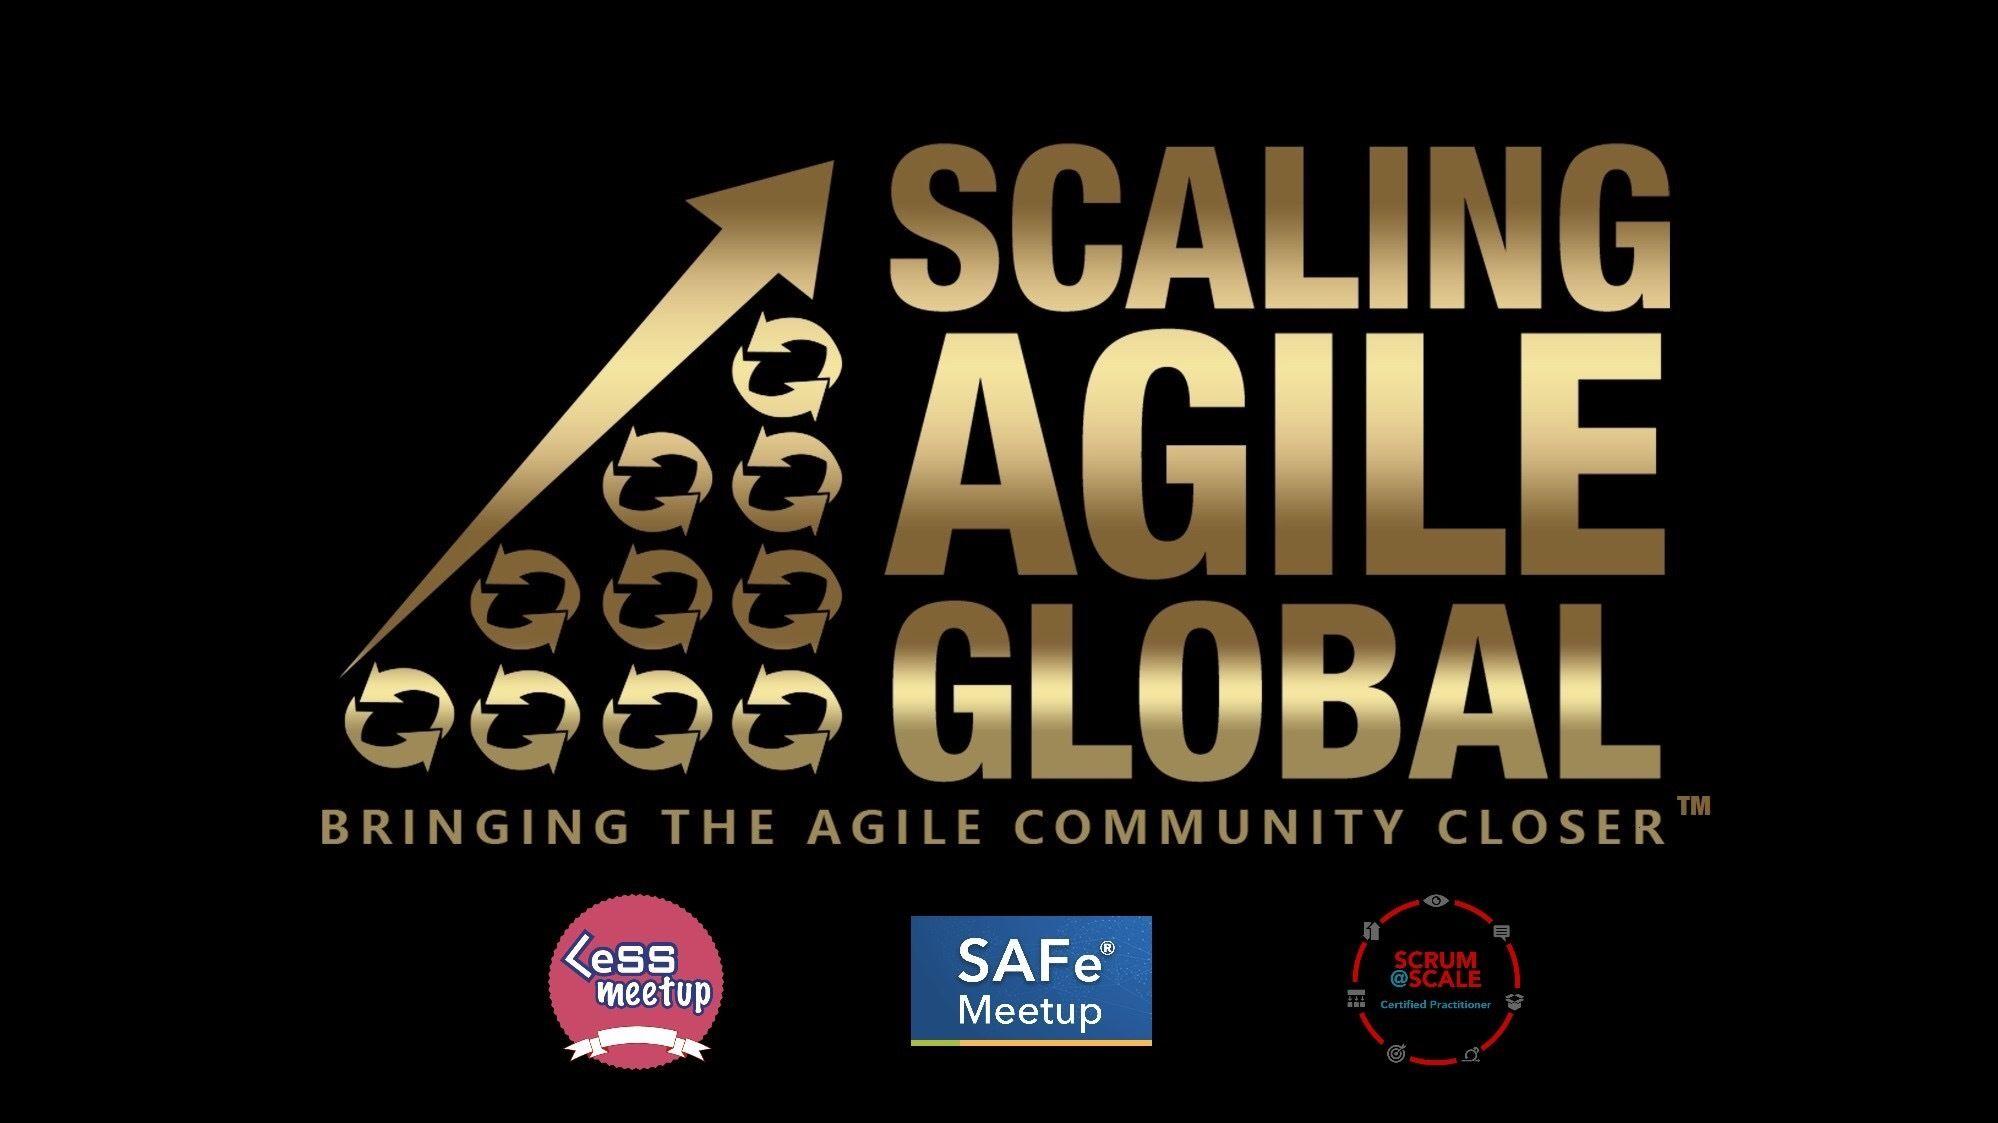 Meeup Logo - Scaling Agile Global @ Software Clinic Joint Meetup | Meetup